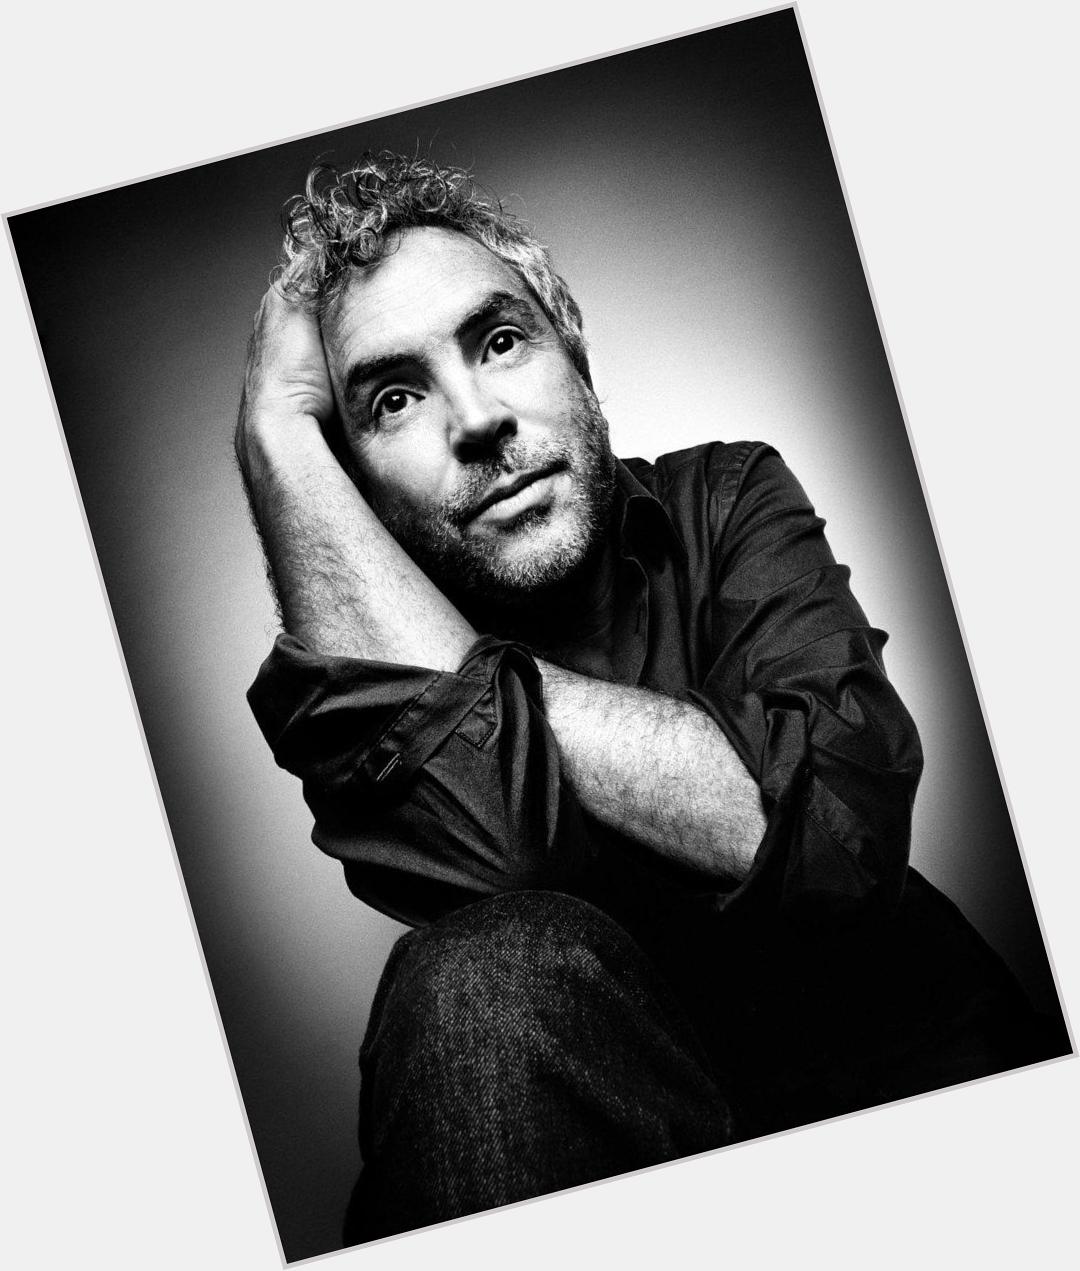 Happy birthday, Alfonso Cuarón!

